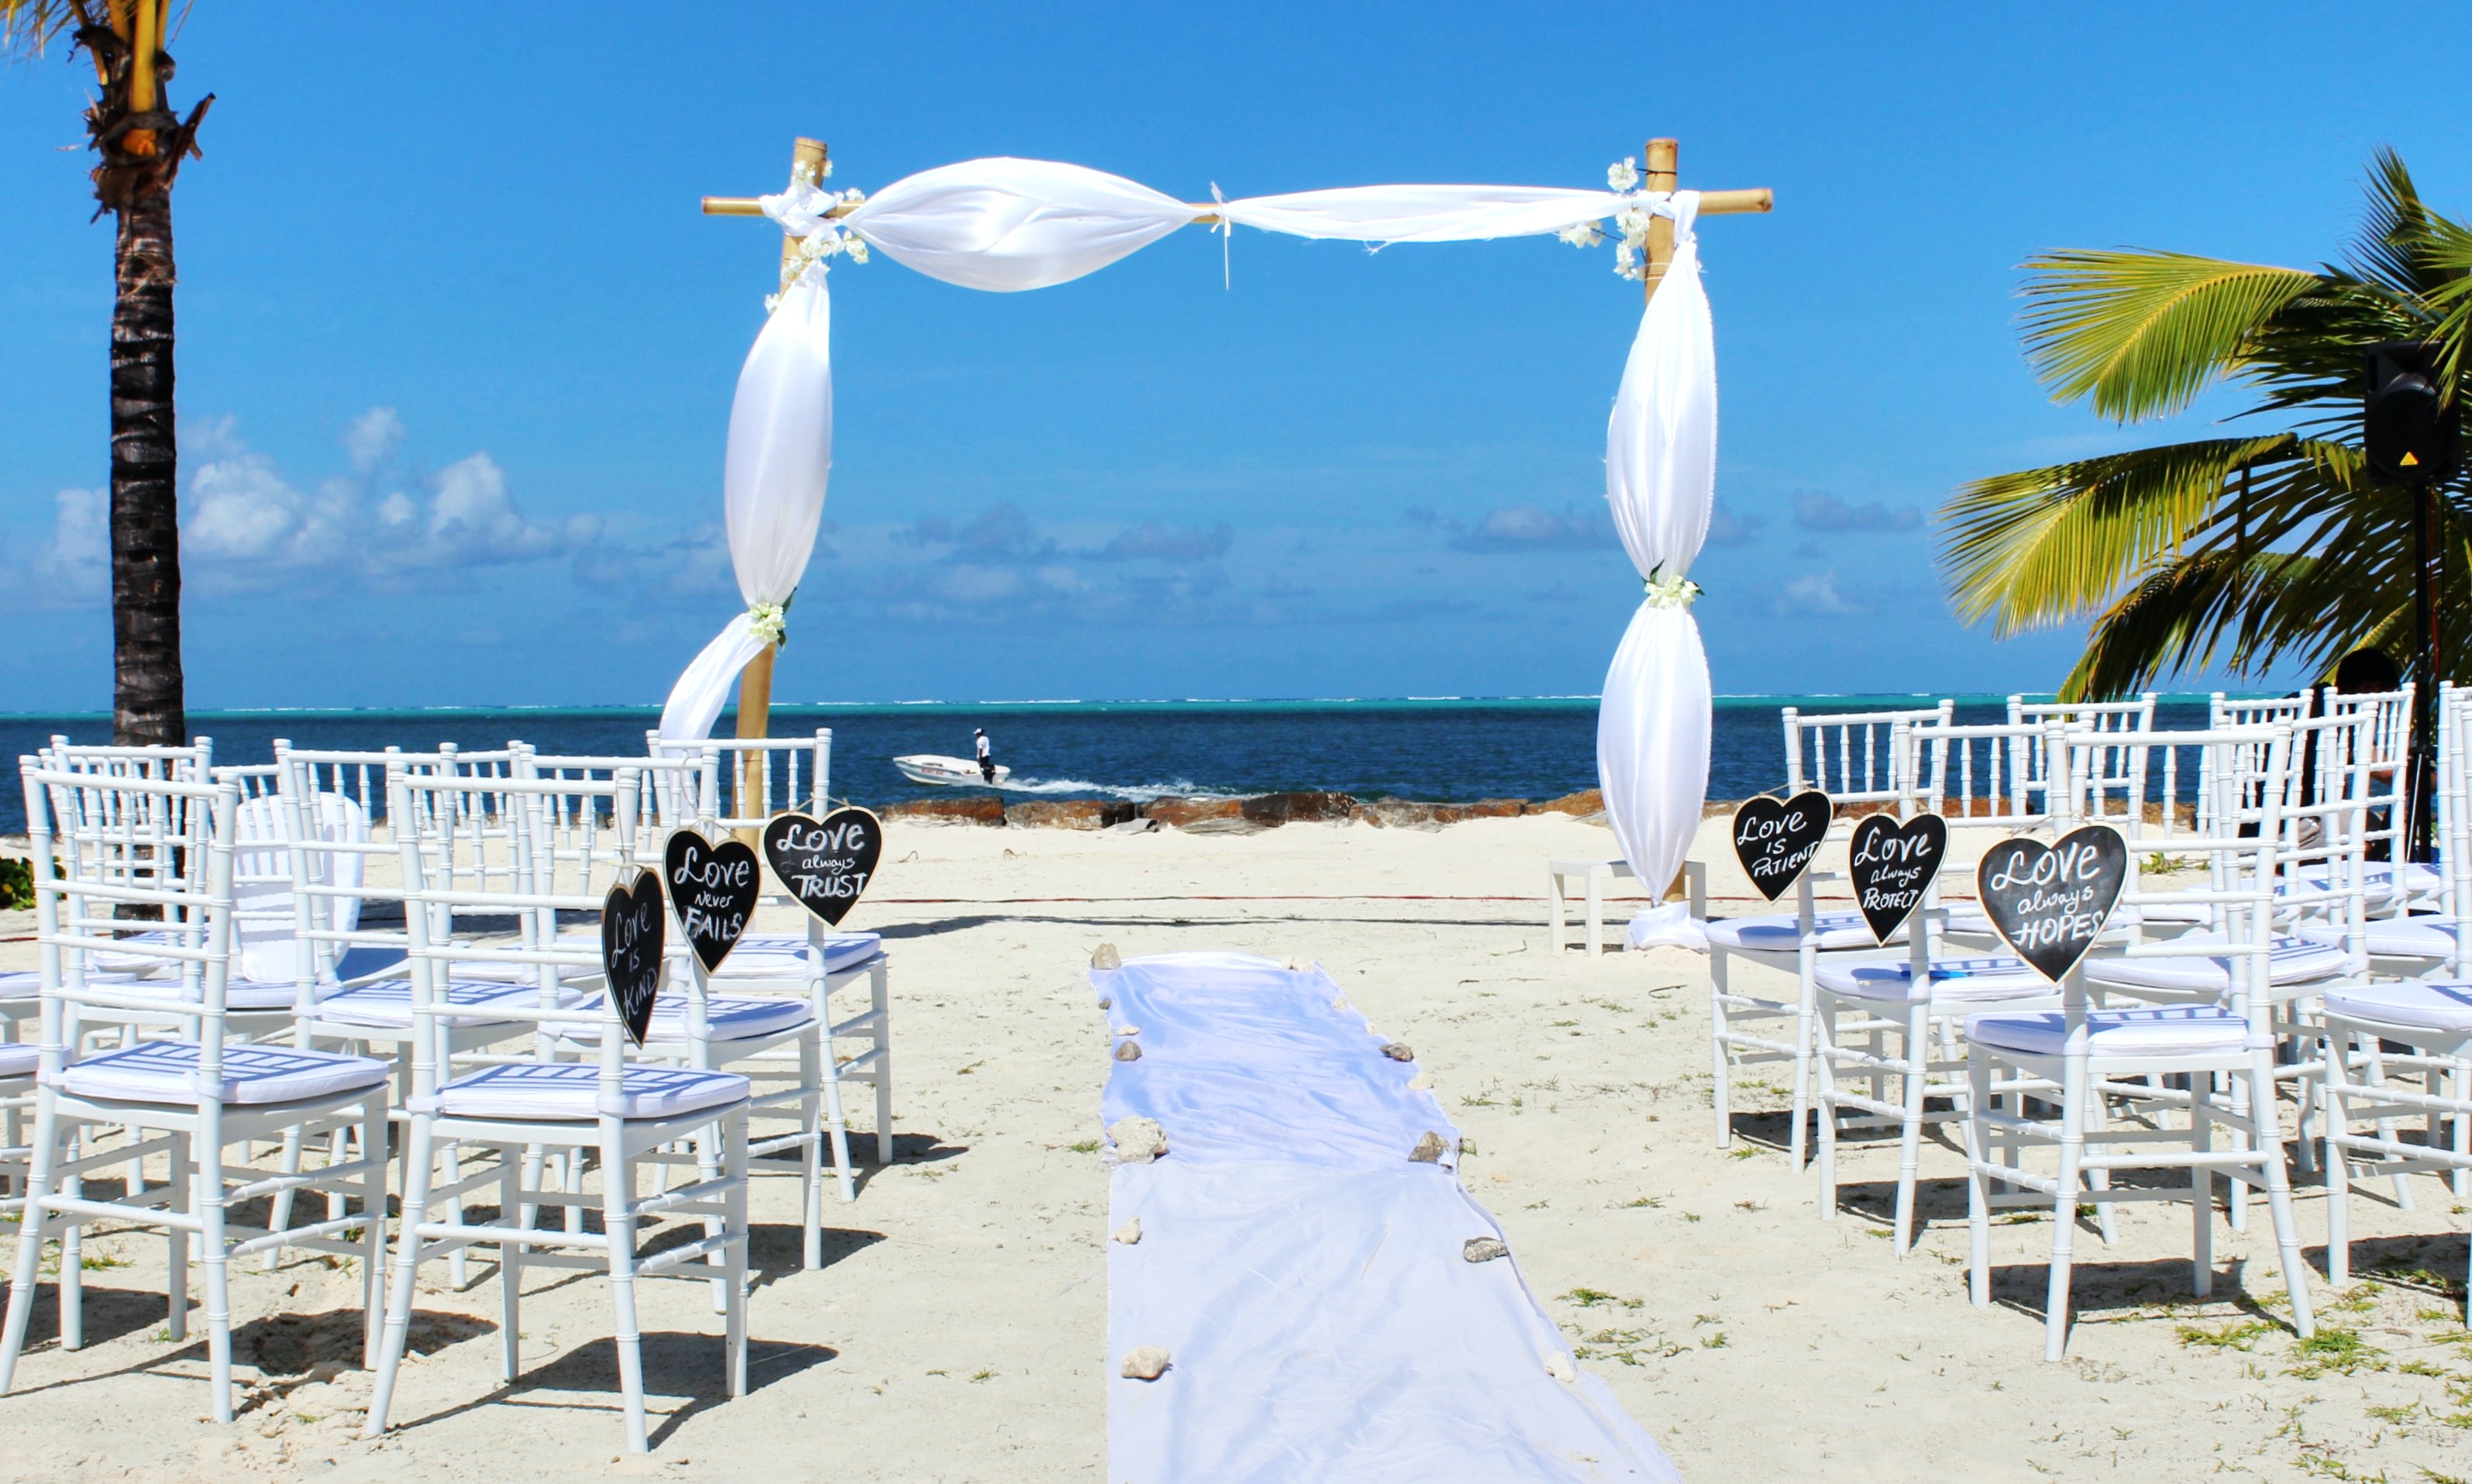 A beach wedding set up. | Source: Unsplash